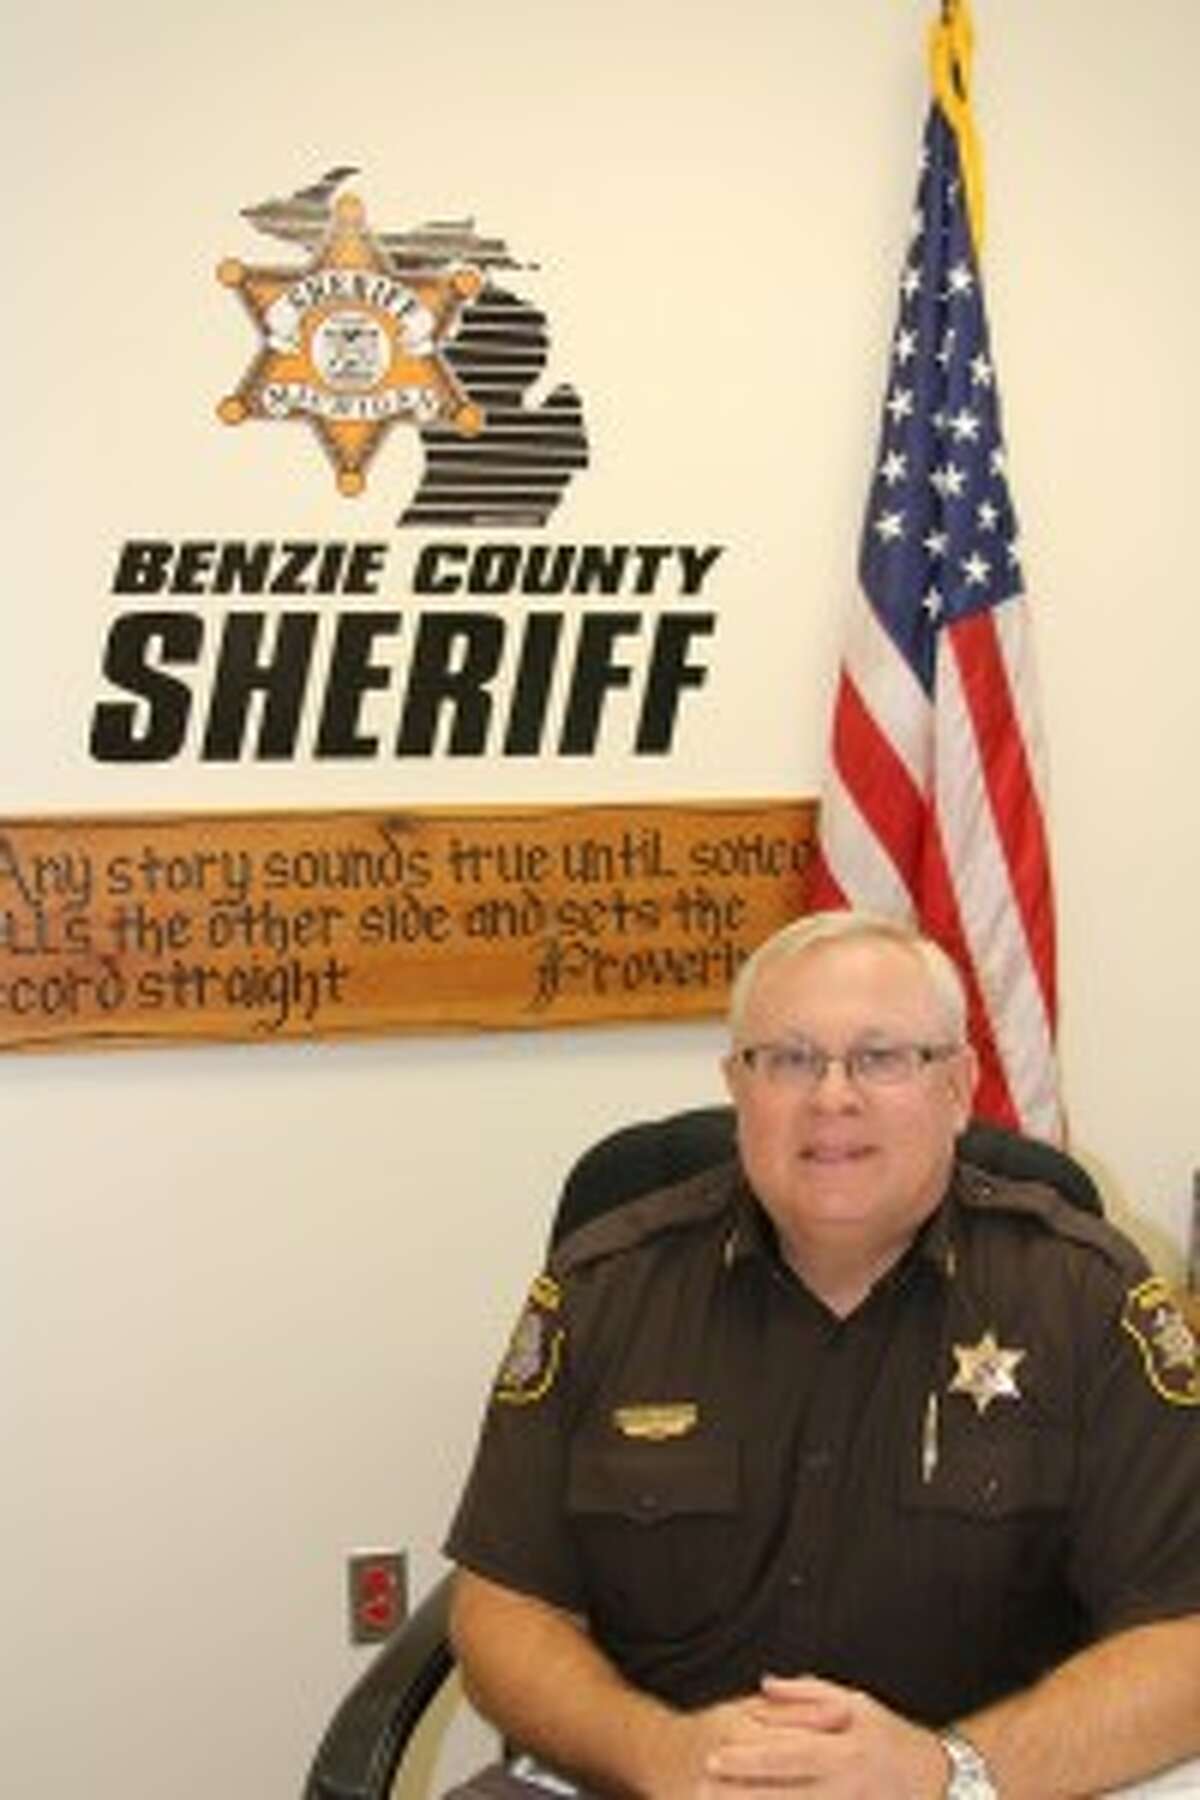 Benzie County Sheriff Ted Schendel